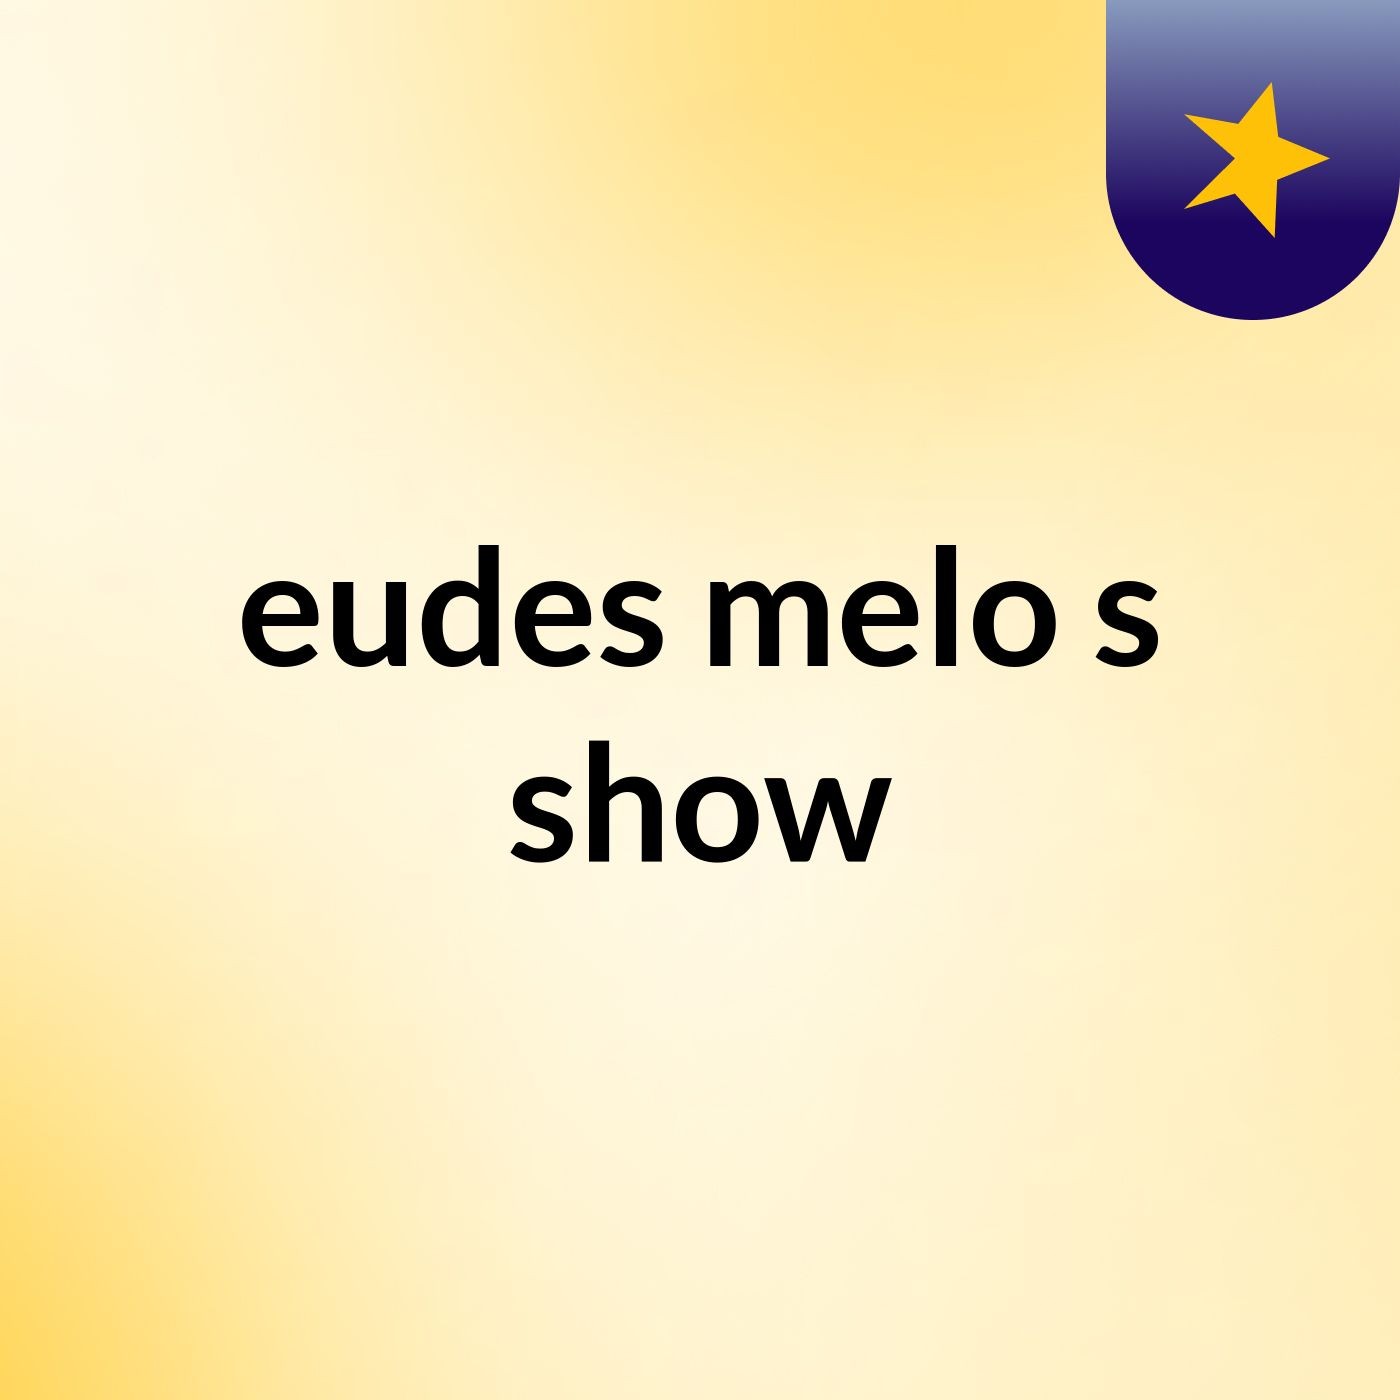 eudes melo's show